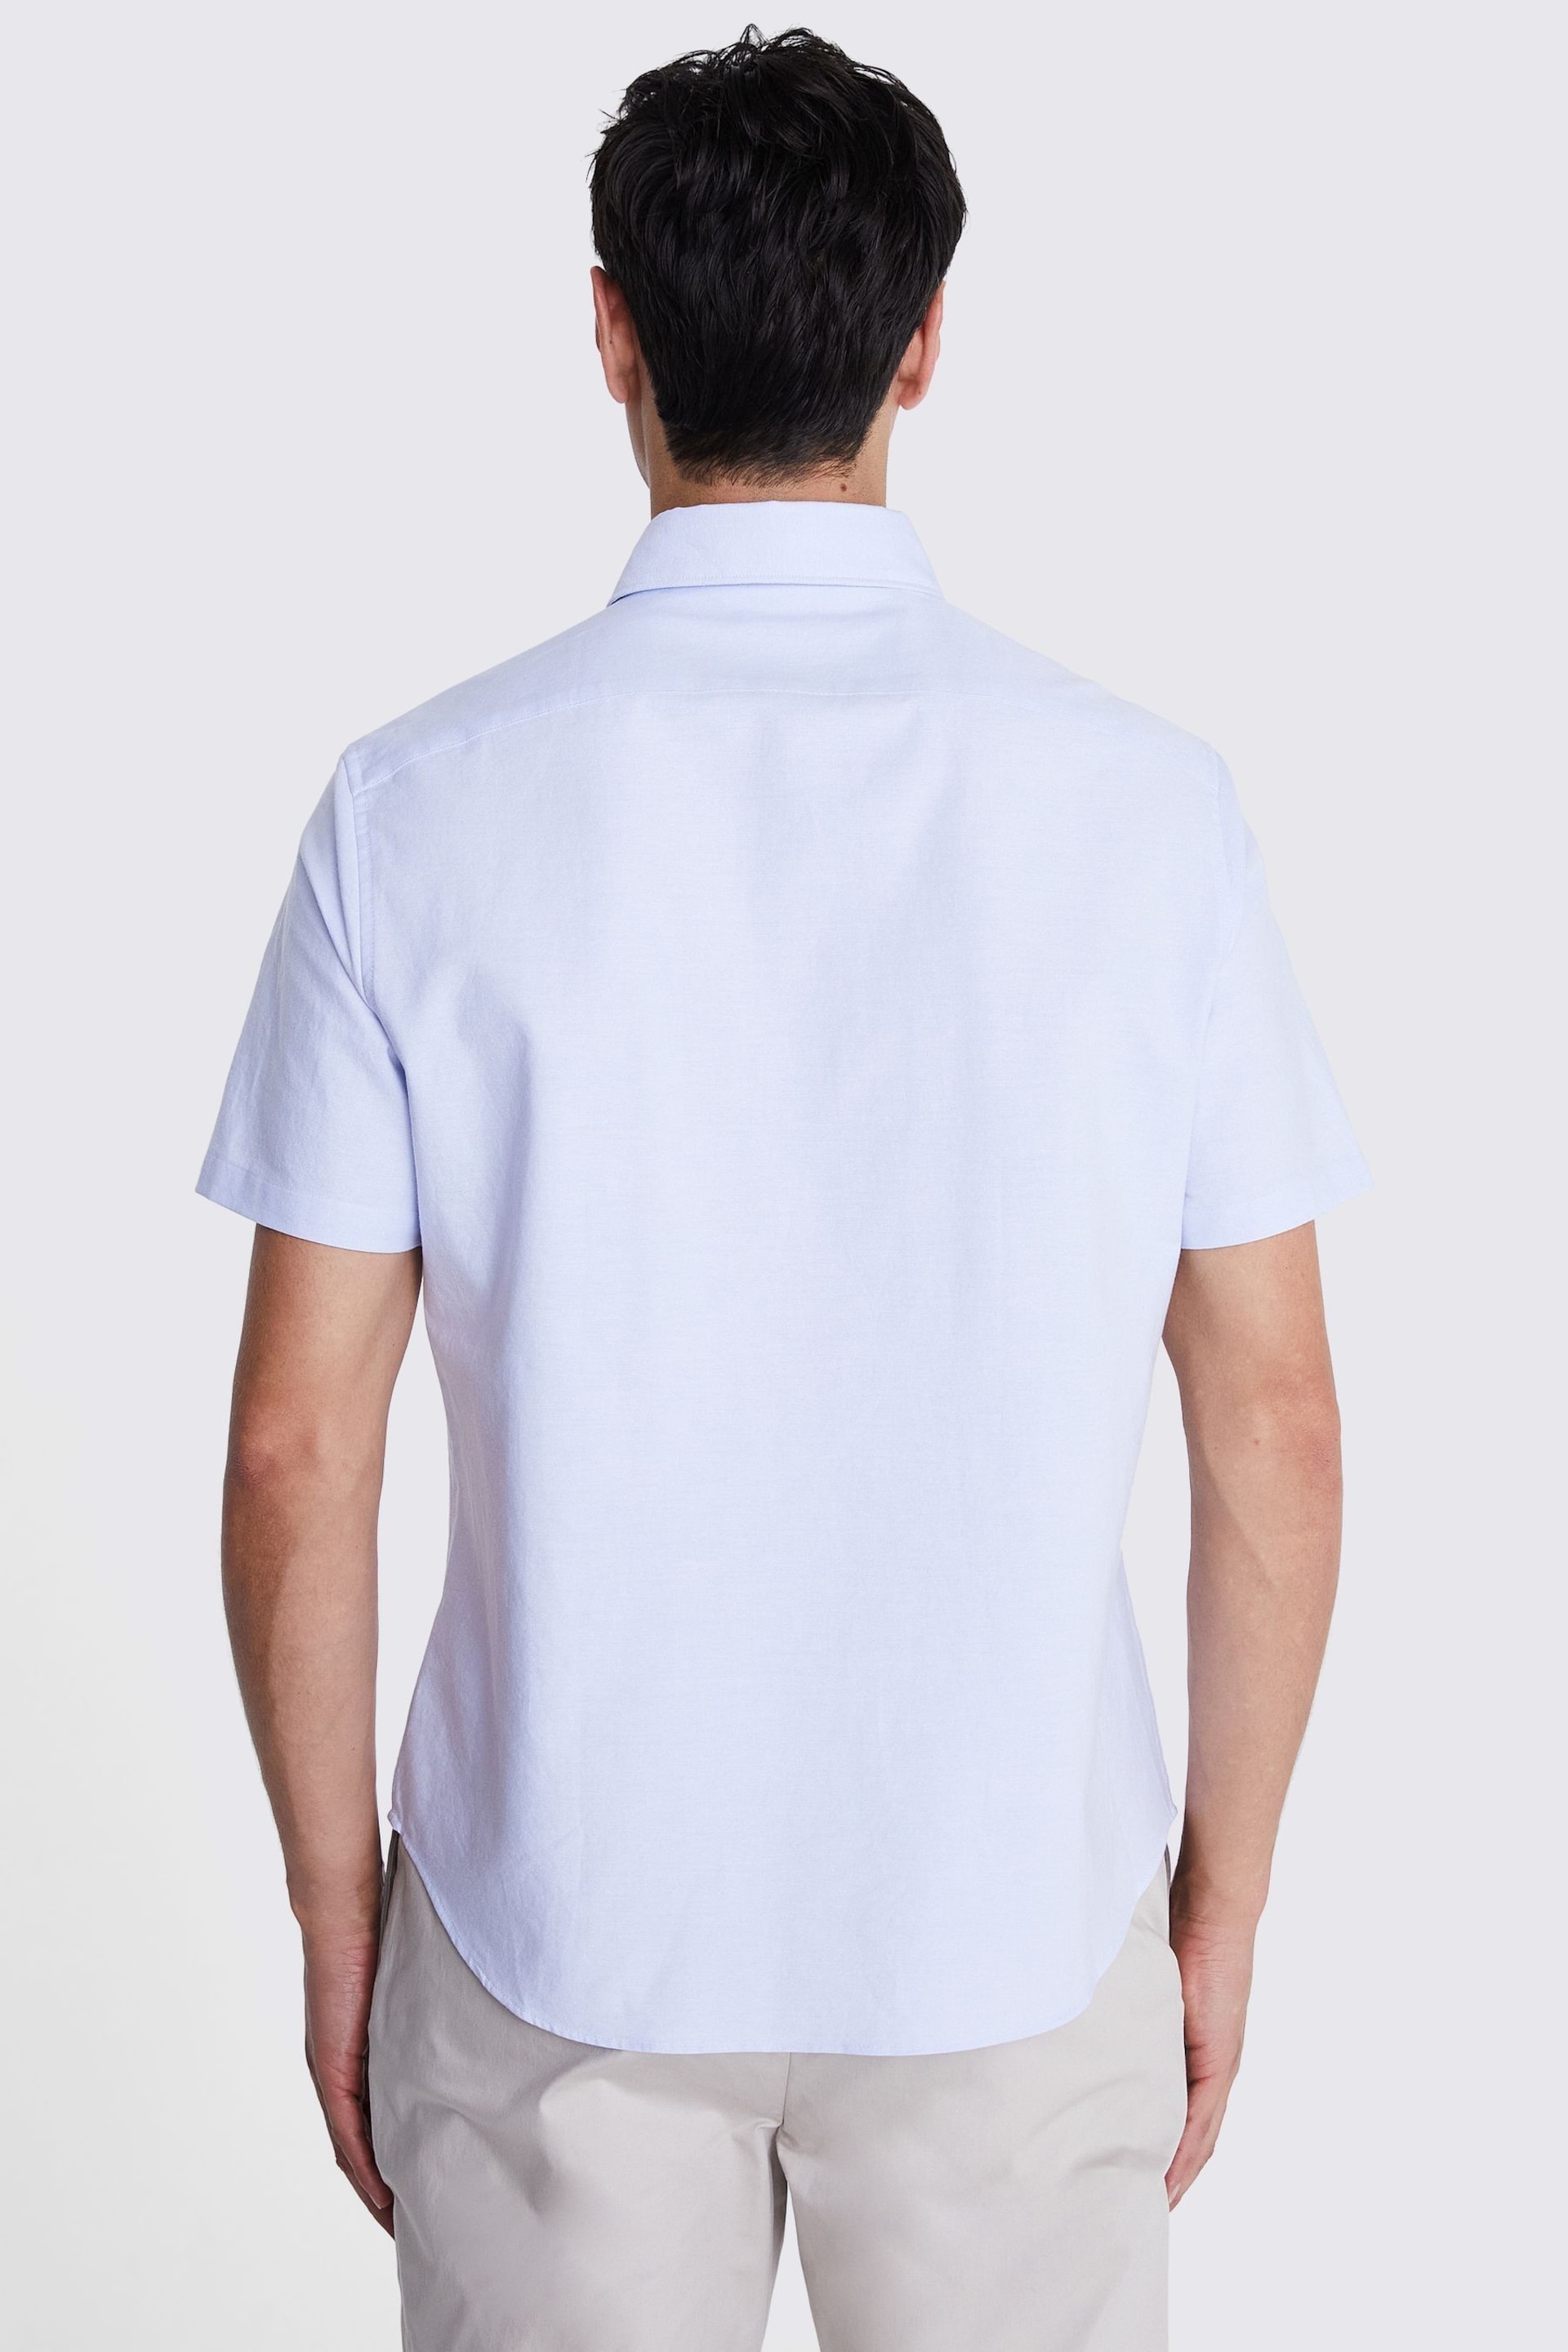 MOSS Blue Short Sleeve Washed Oxford Shirt - Image 3 of 4